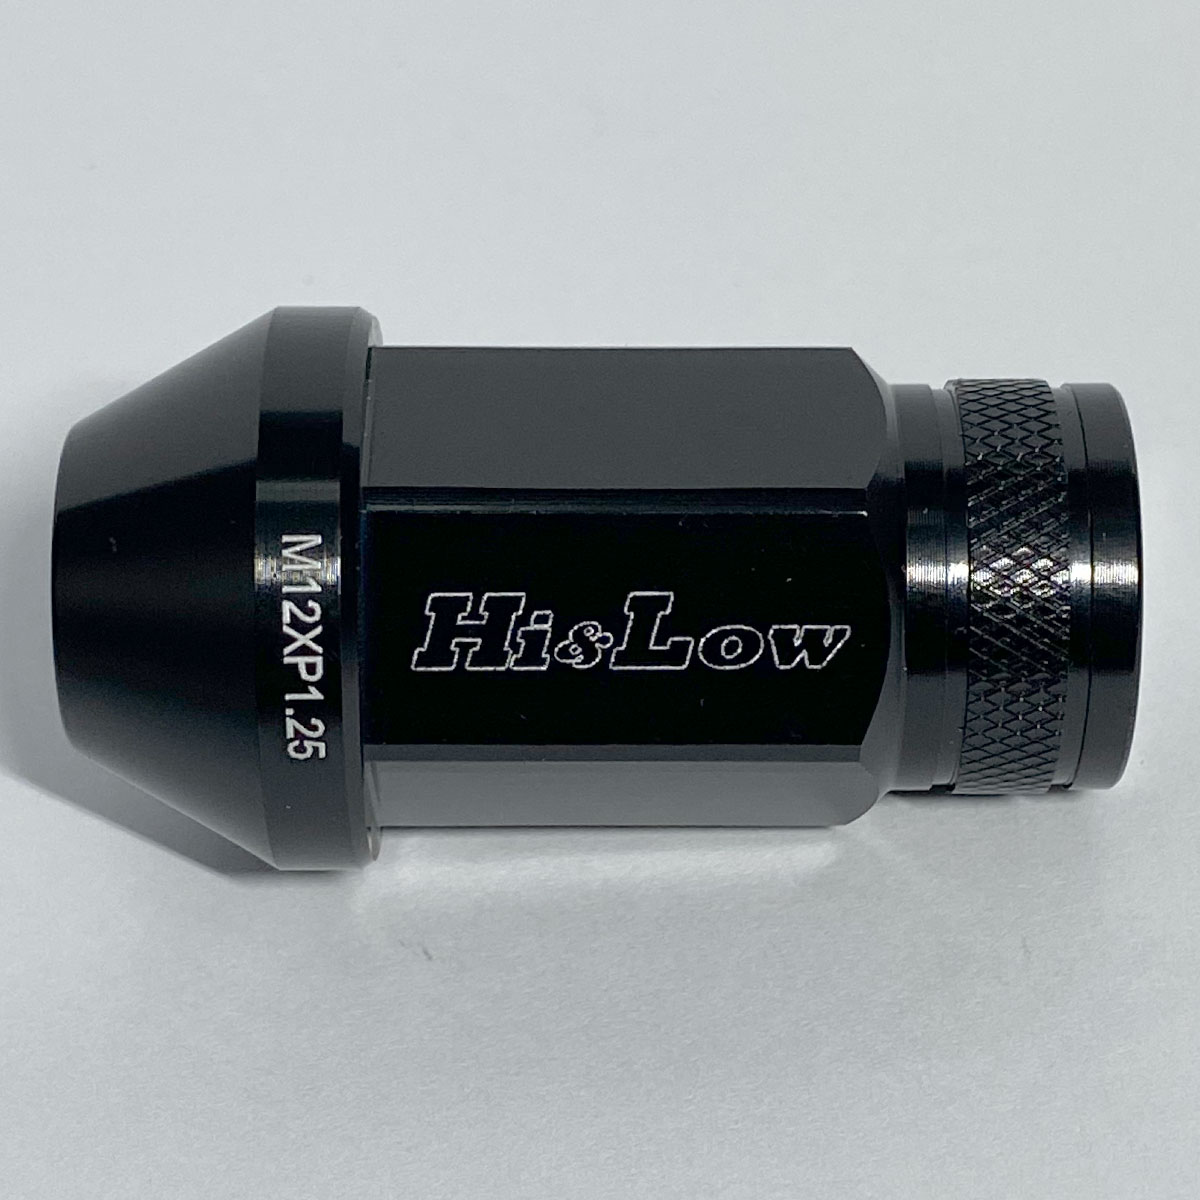 Hi&Low conceptH 超高輝度純白光LEDNV350キャラバンE26GX/ライダー用LEDルームランプセット